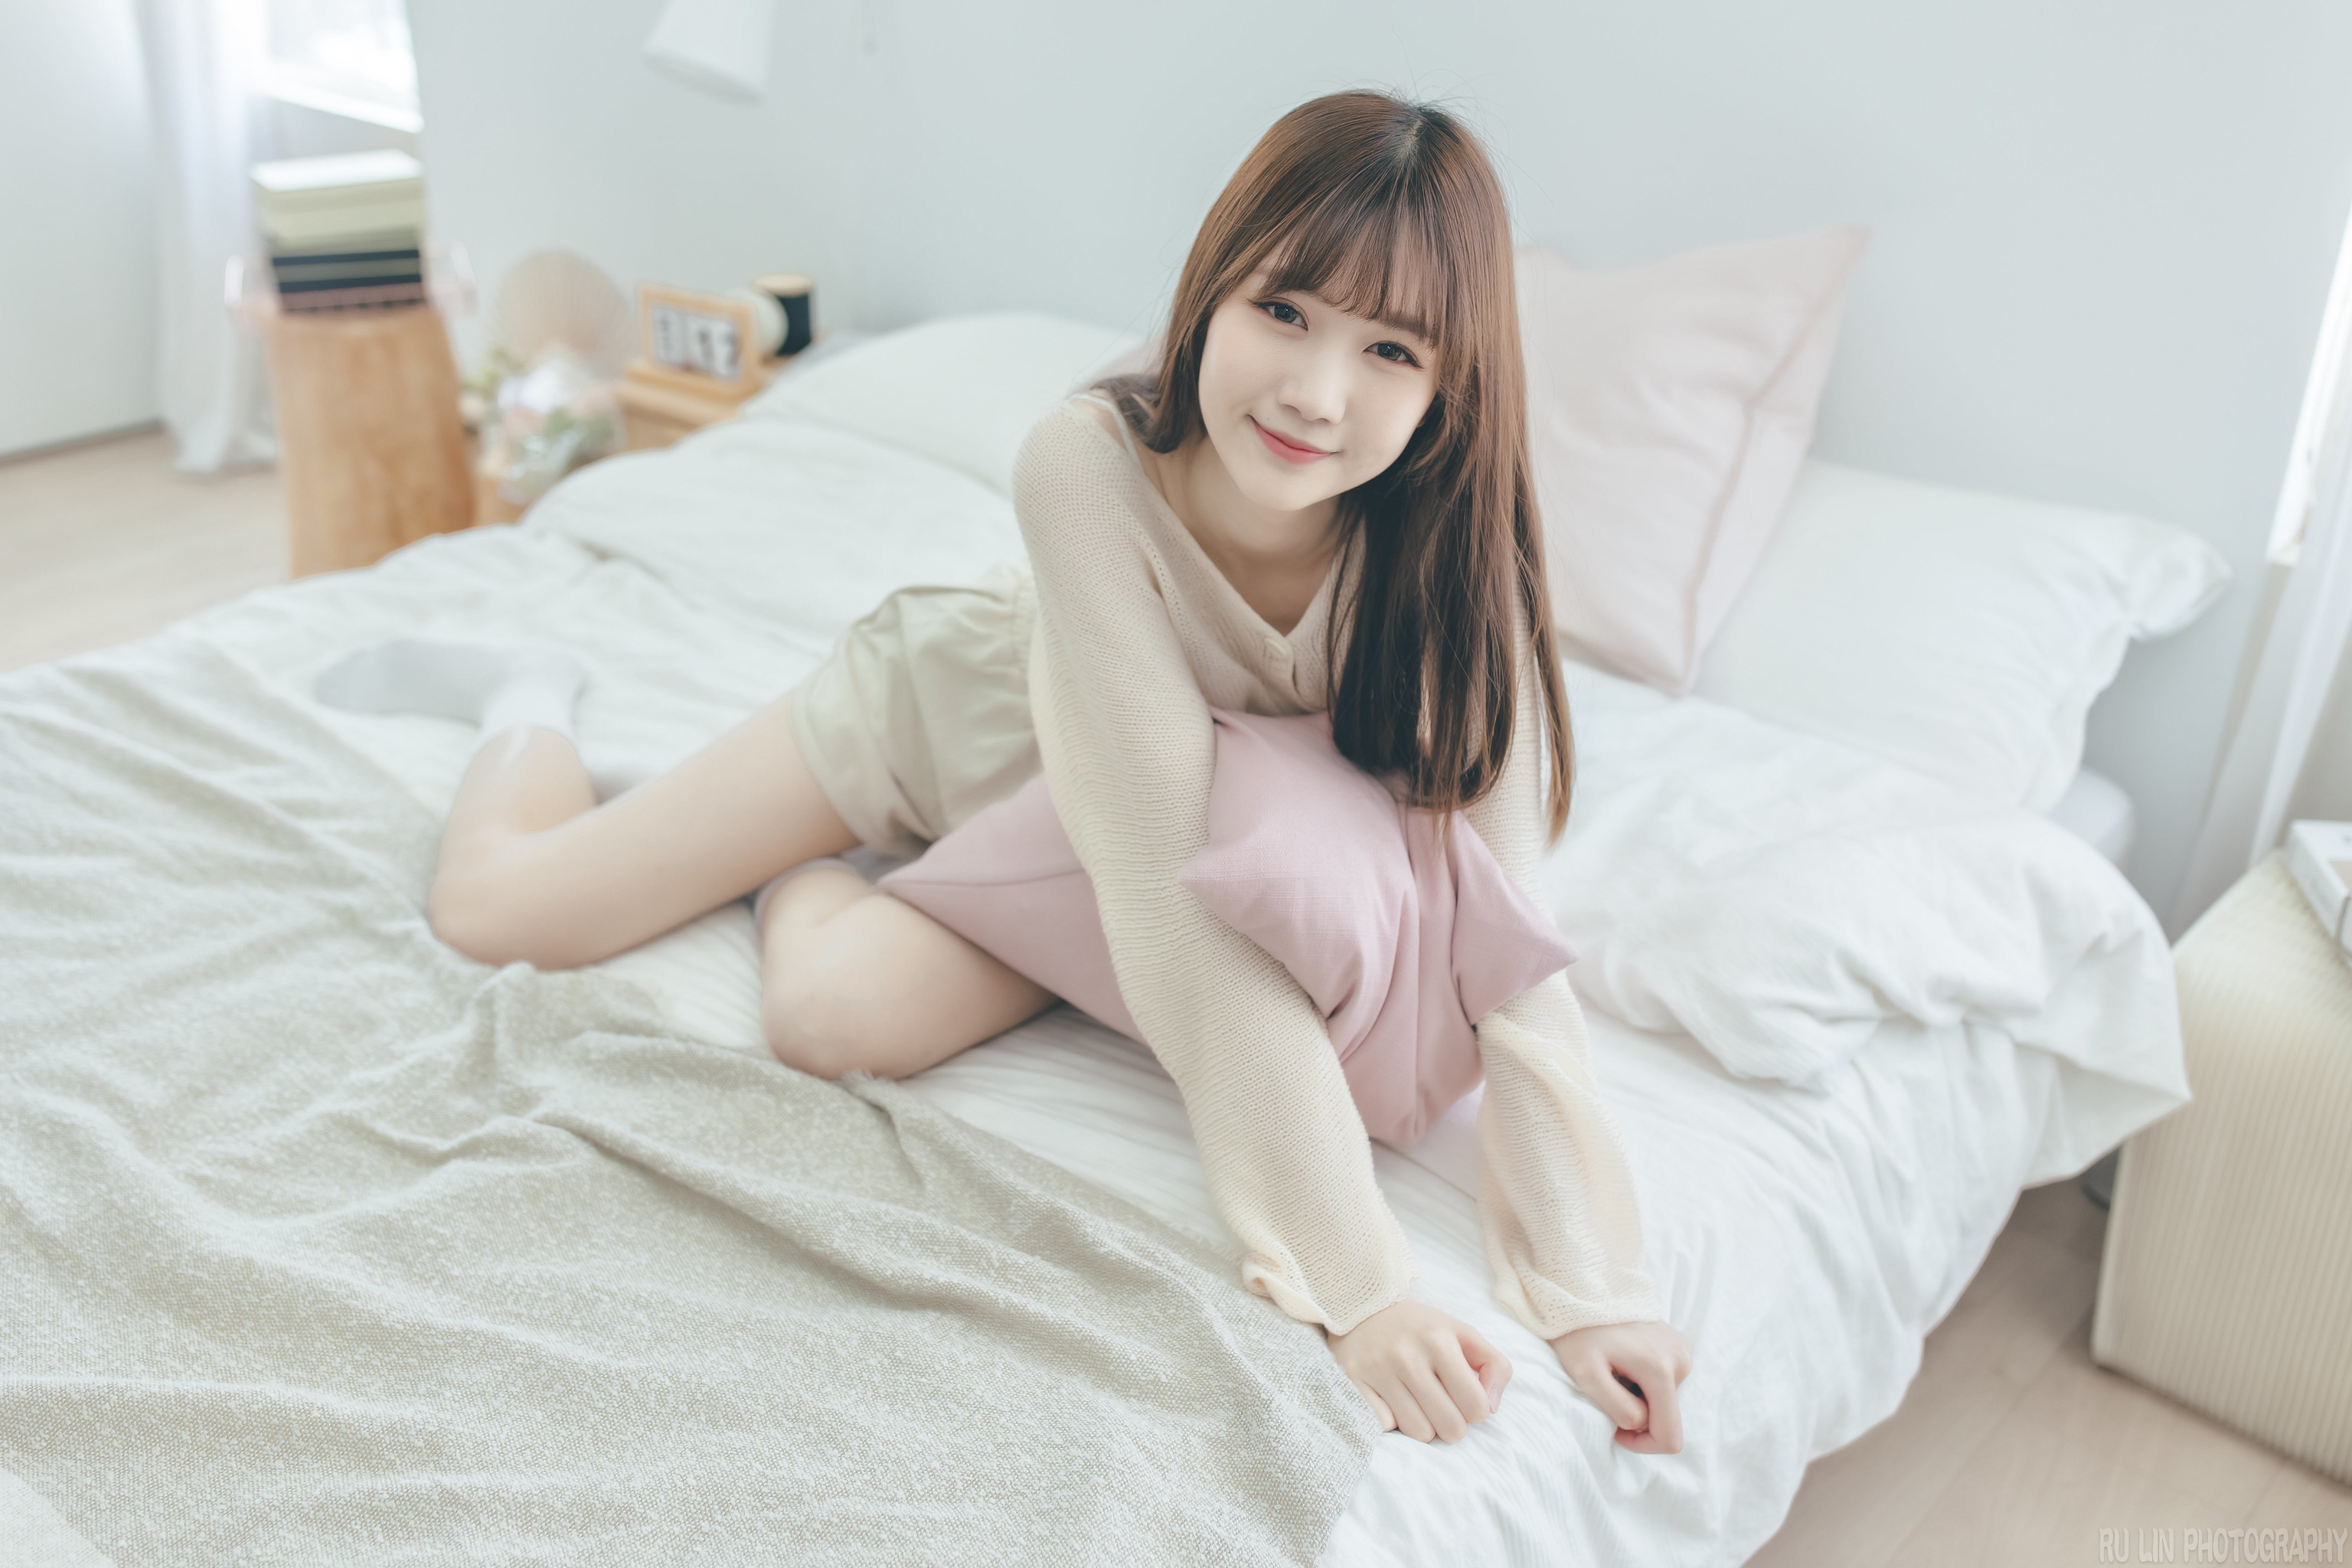 Ru Lin Women Asian Brunette Casual Bedroom Smiling 3072x2048